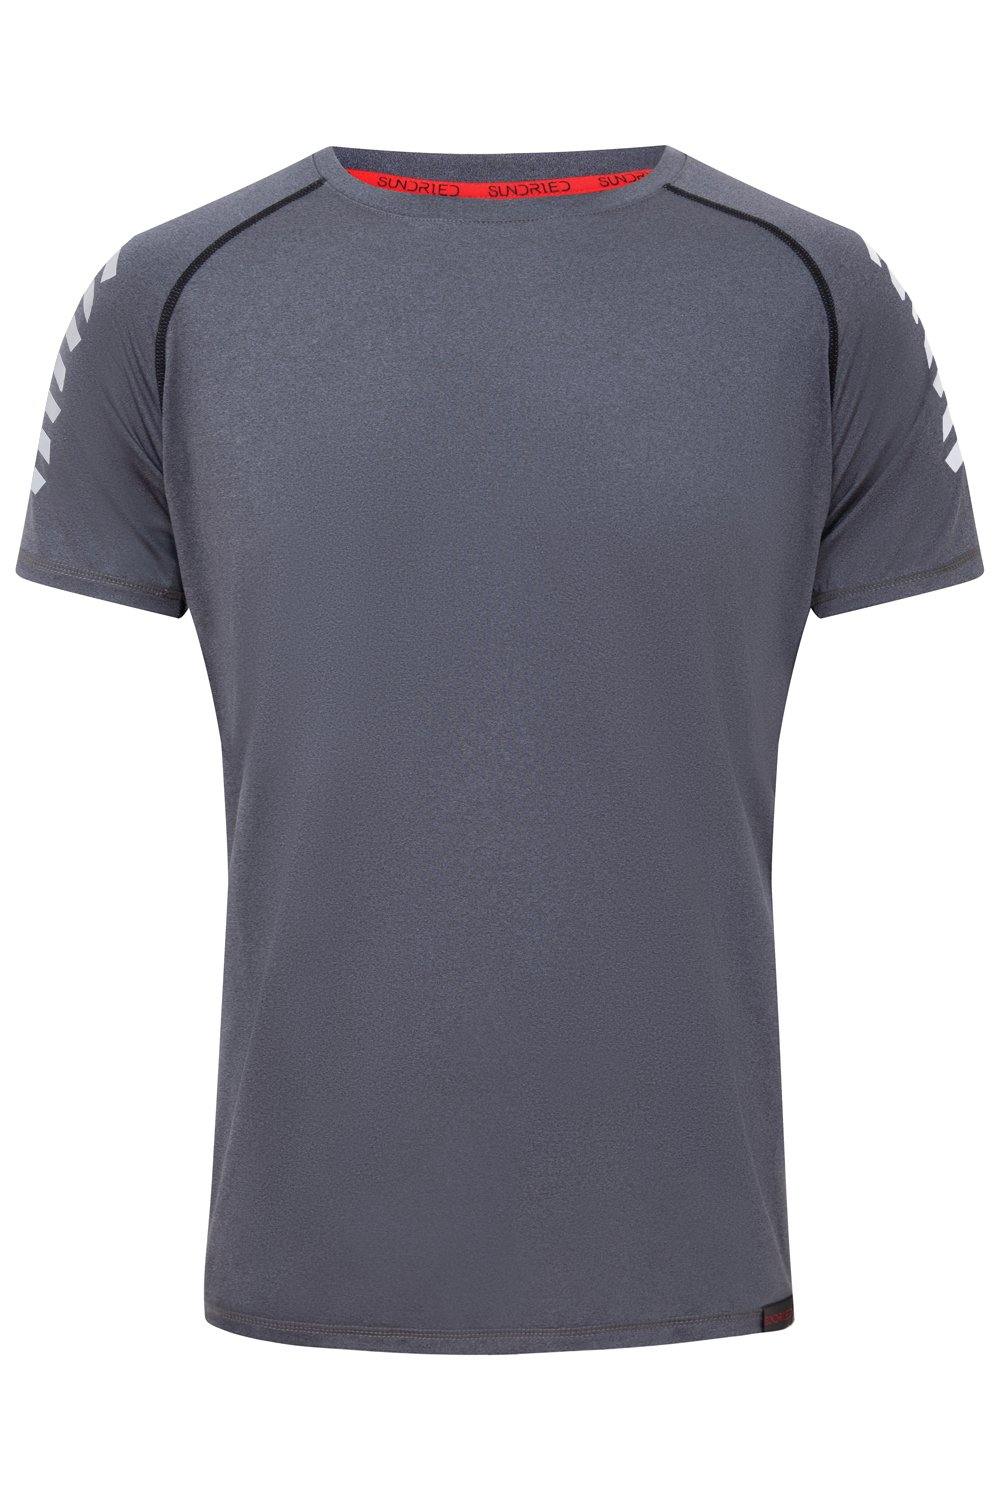 Sundried Eiger Men's T-Shirt T-Shirt S Grey SD0147 S Grey Activewear